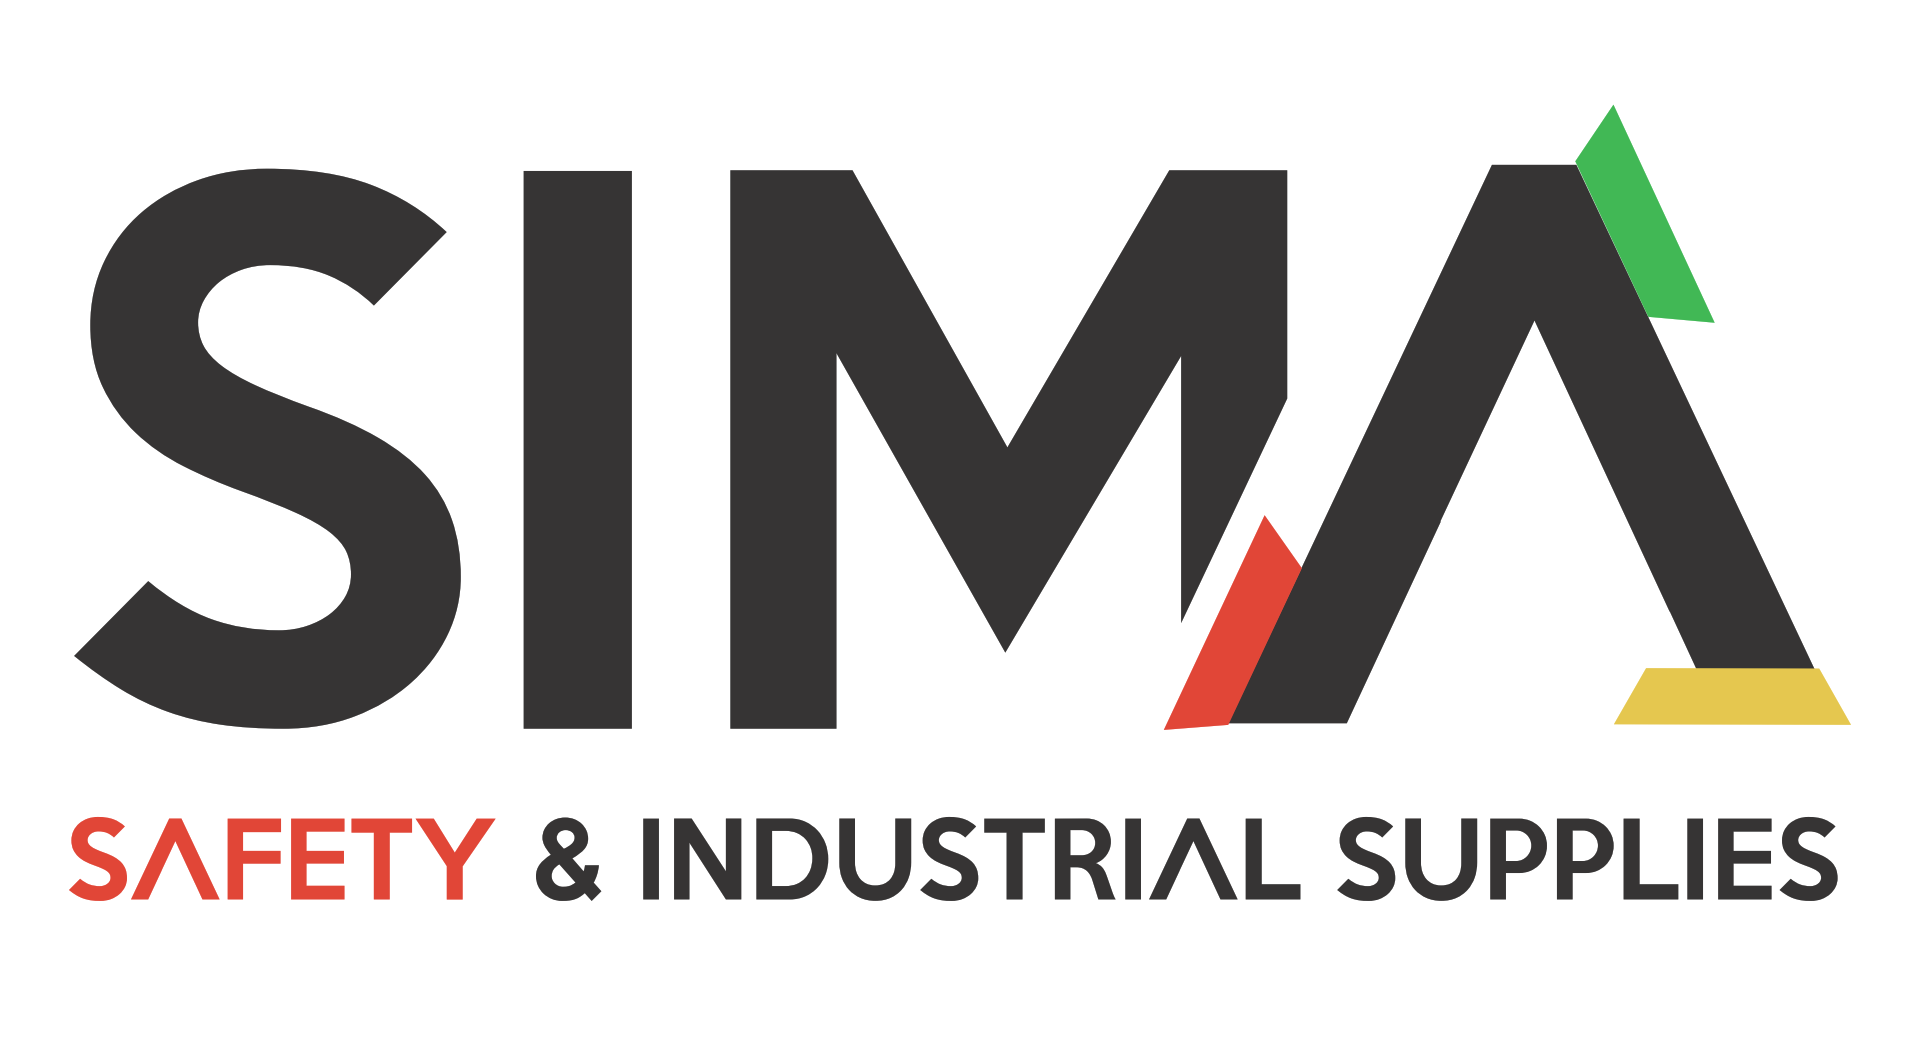 SIMA Industrial